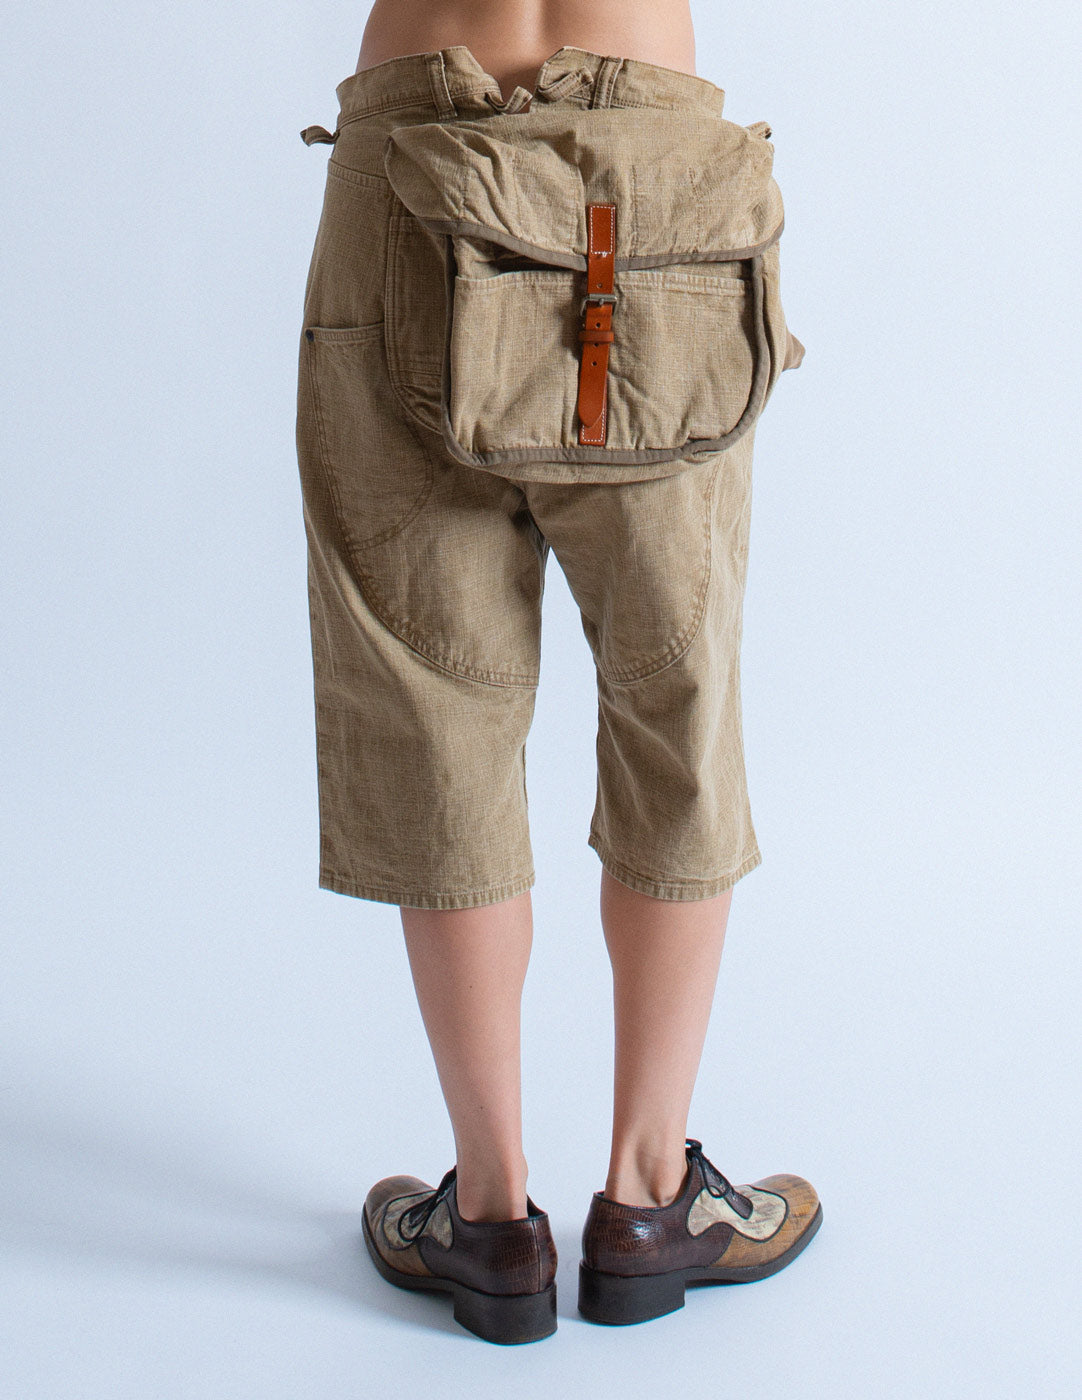 Kapital cargo shorts with hip bag back detail